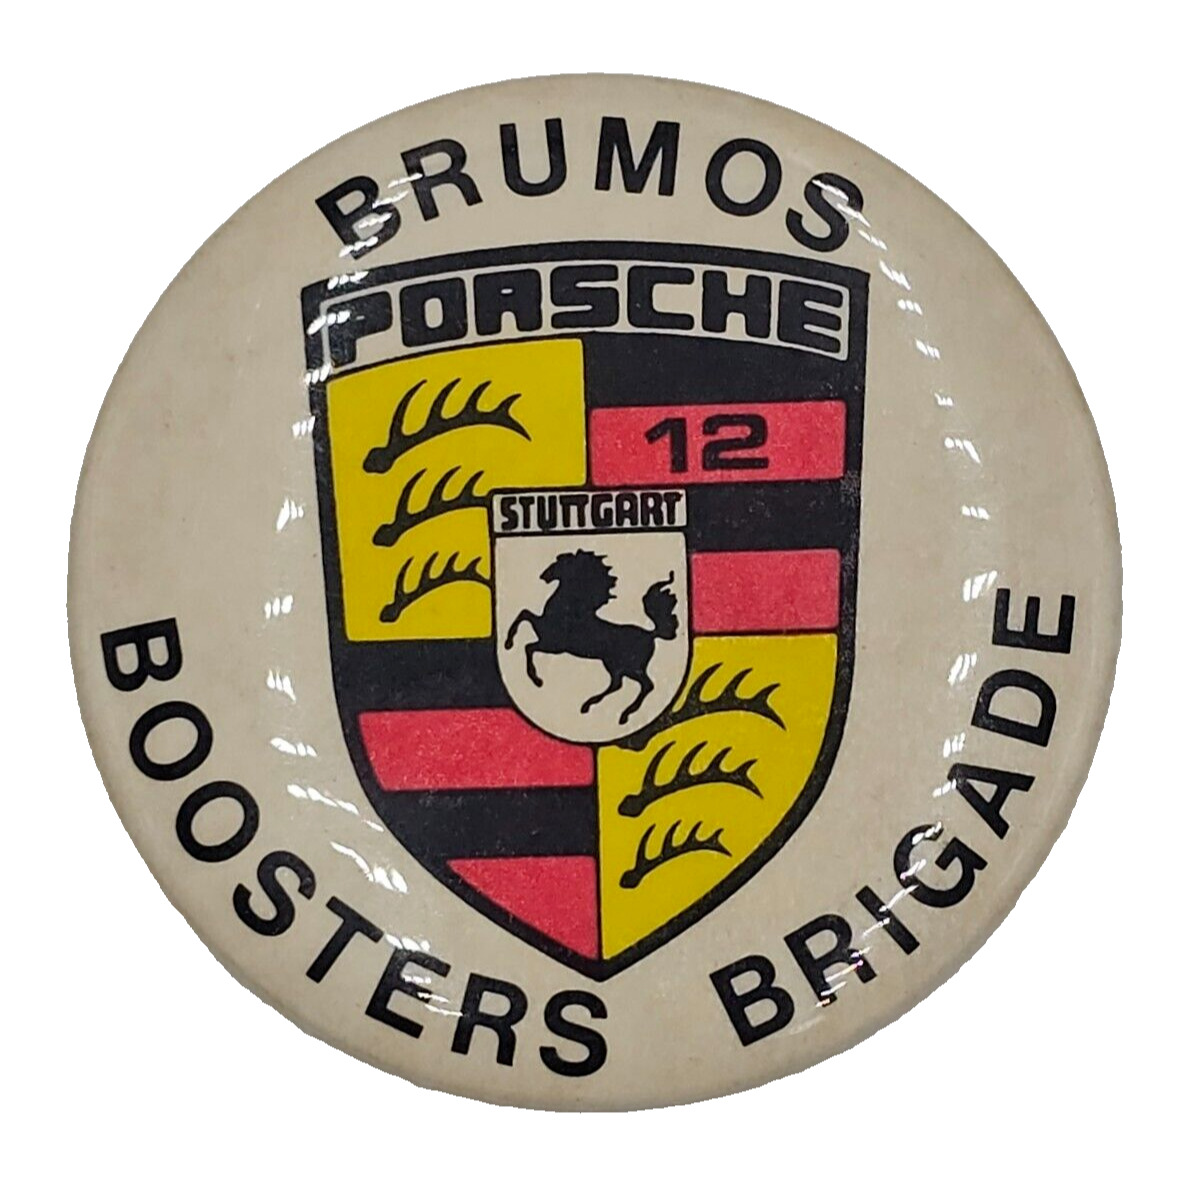 VINTAGE Porsche Brumos boosters brigade - PINBACK BUTTON - 3 inch - PCA